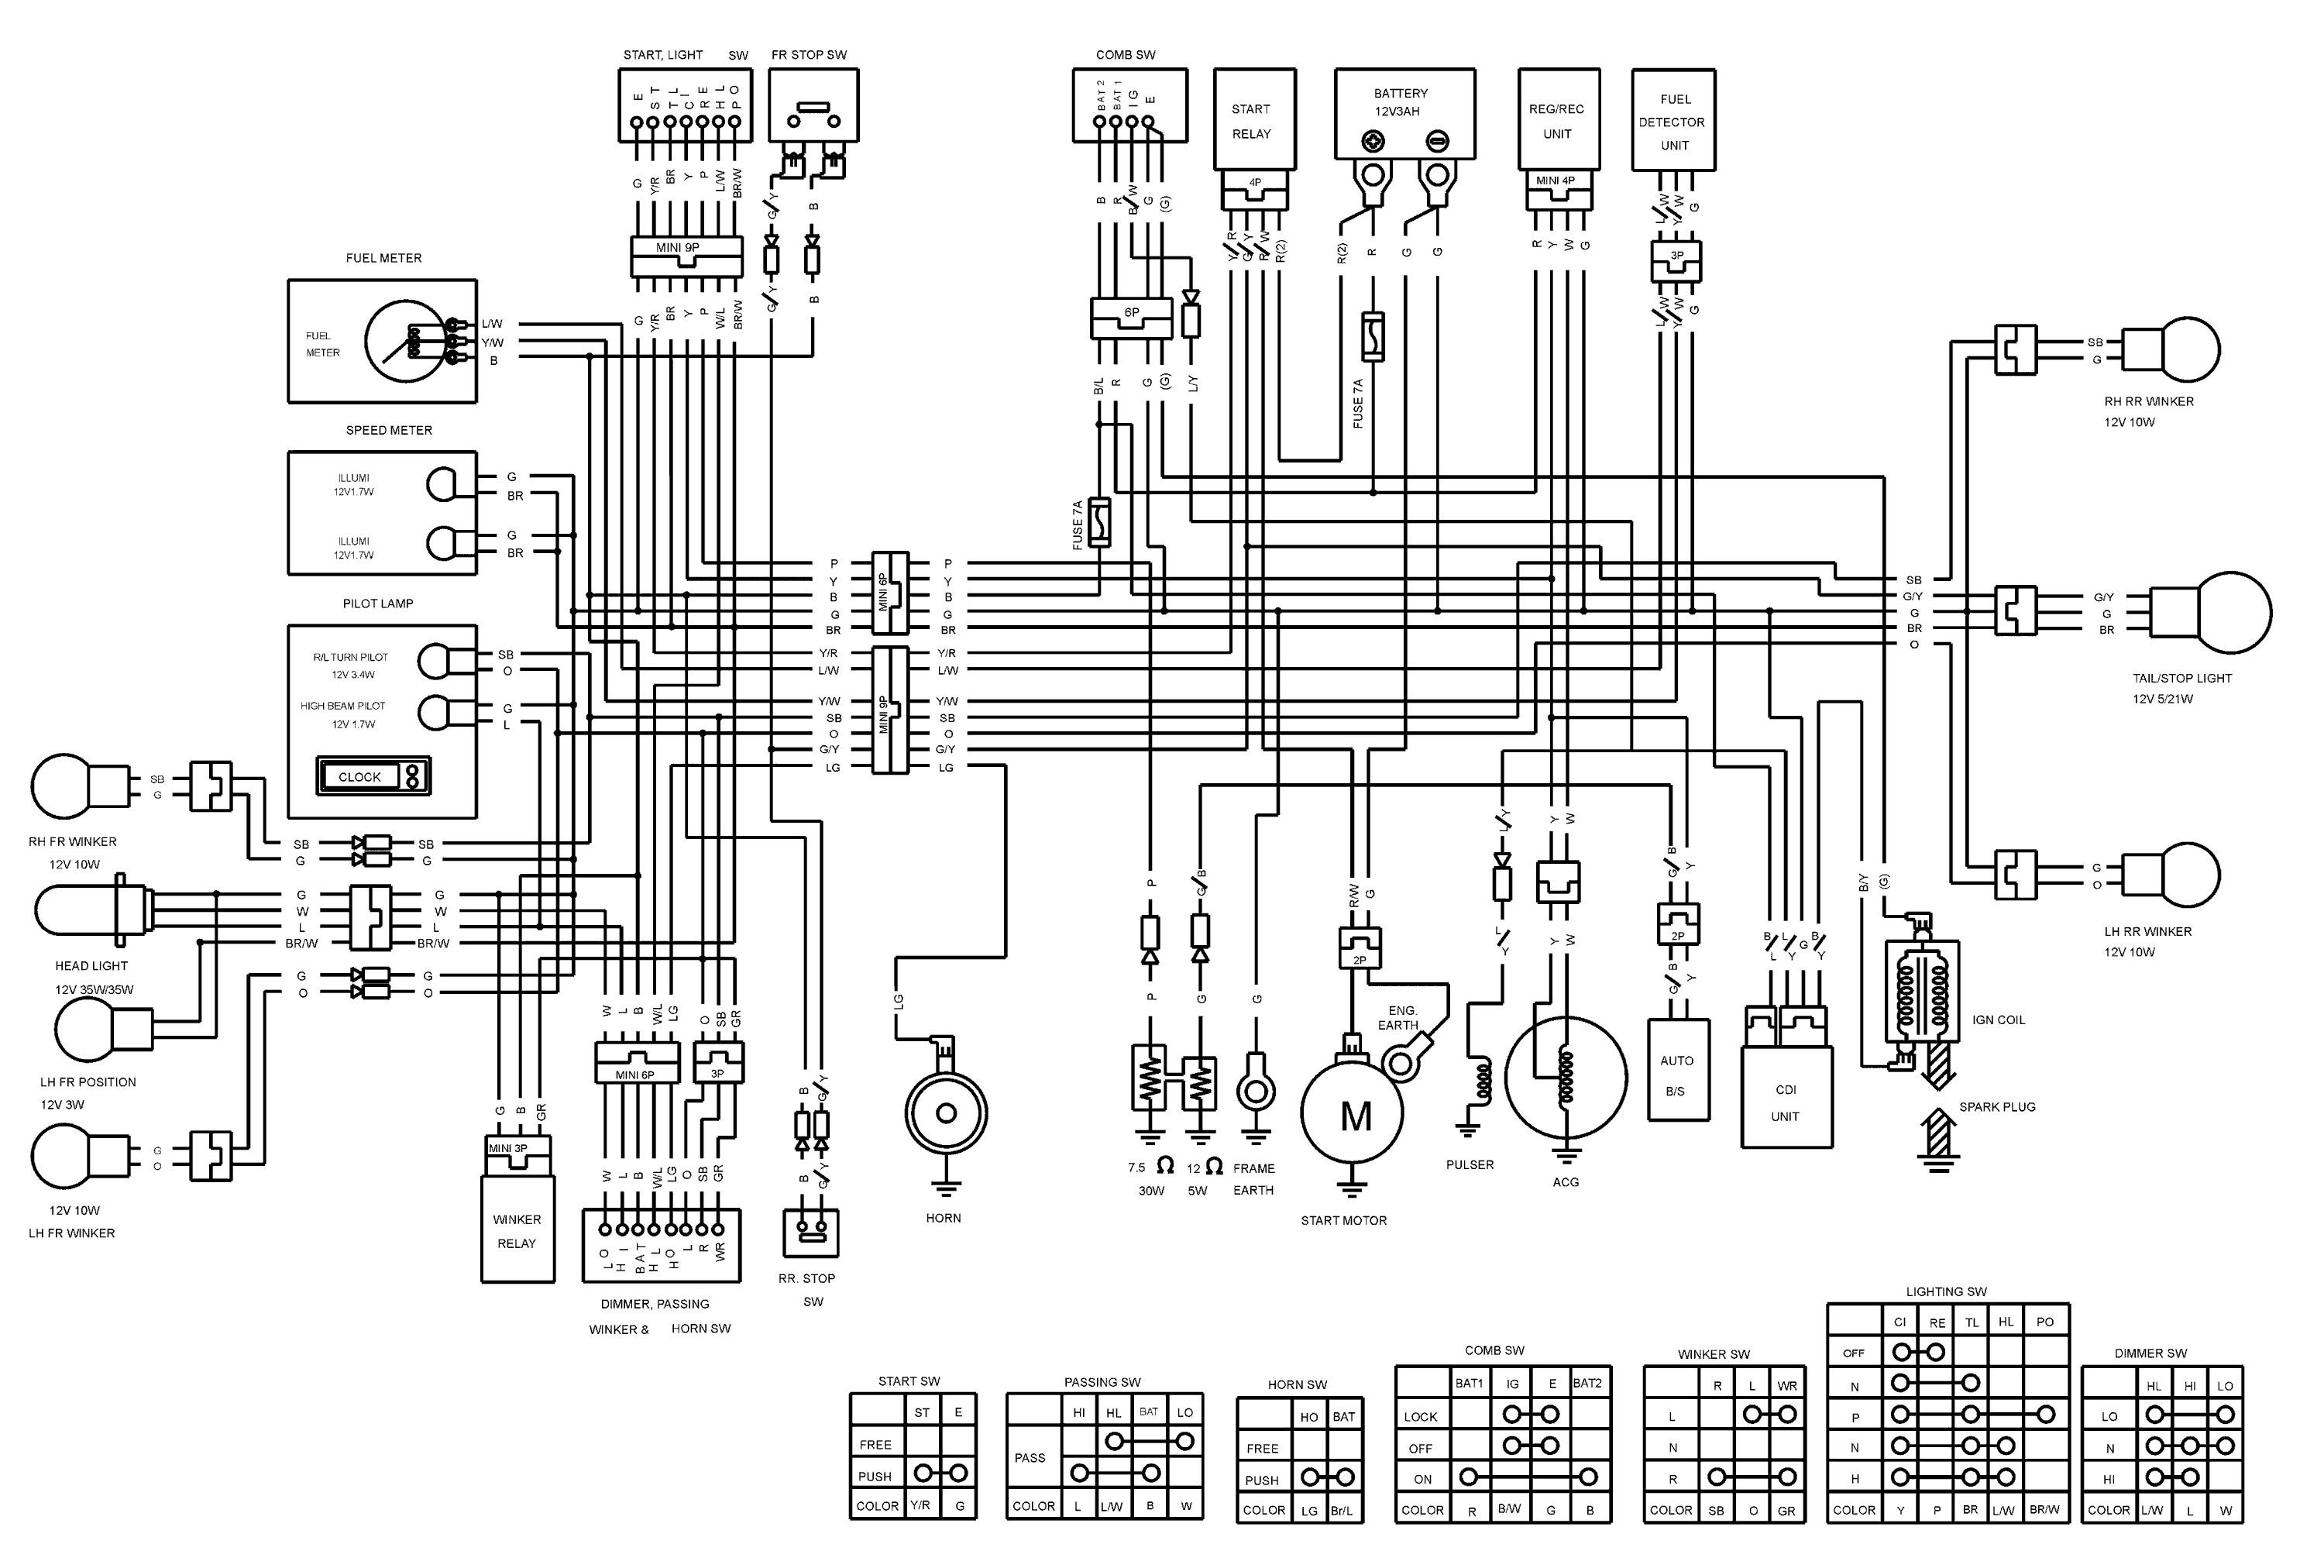 Tomos A55 Engine Diagram 10 2011 tomos Moped Wiring Diagram Wiring Diagram Of Tomos A55 Engine Diagram